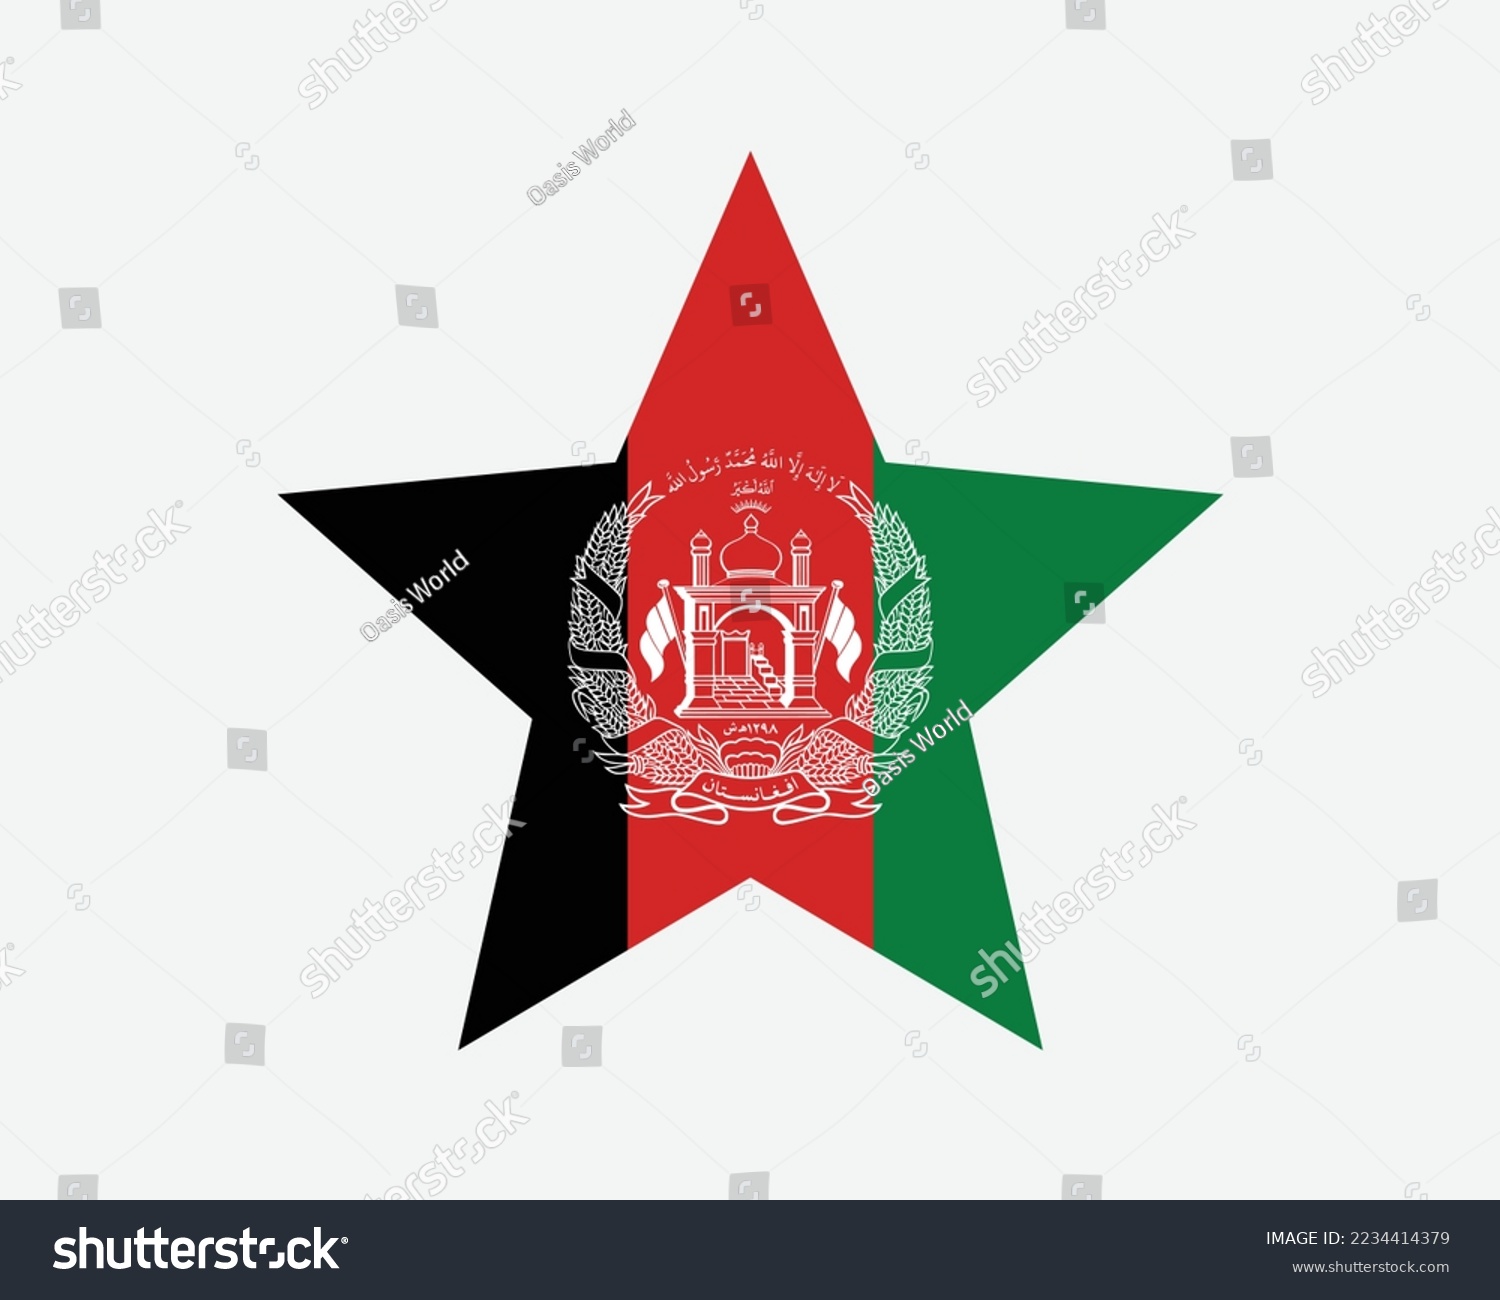 SVG of Afghanistan Star Flag. Afghan Star Shape Flag. Islamic Republic of Afghanistan Country National Banner Icon Symbol Vector 2D Flat Artwork Graphic Illustration svg